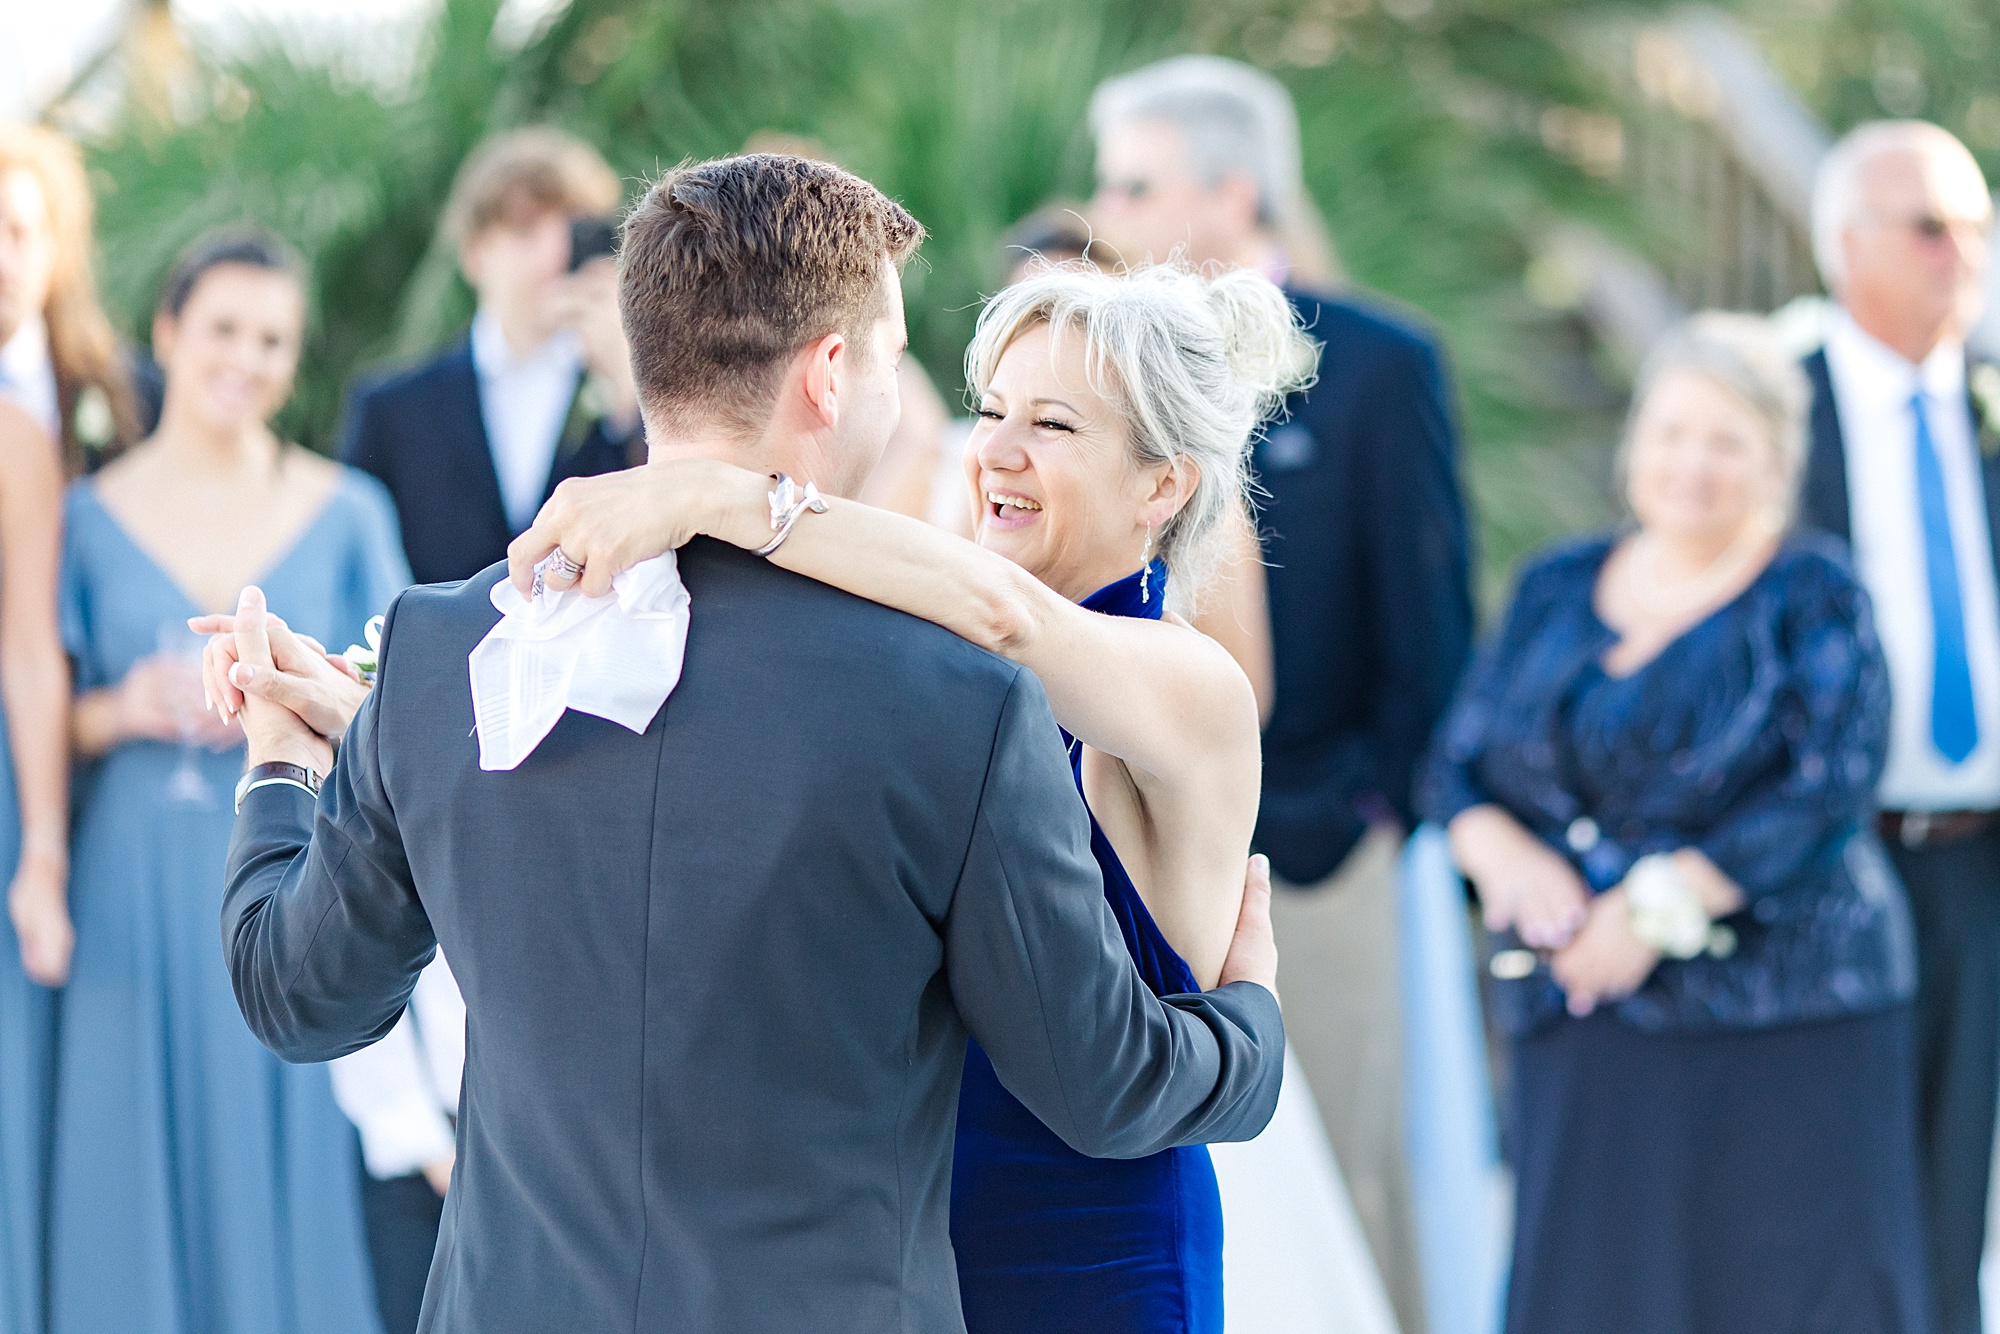 mother-son dance at beach wedding reception